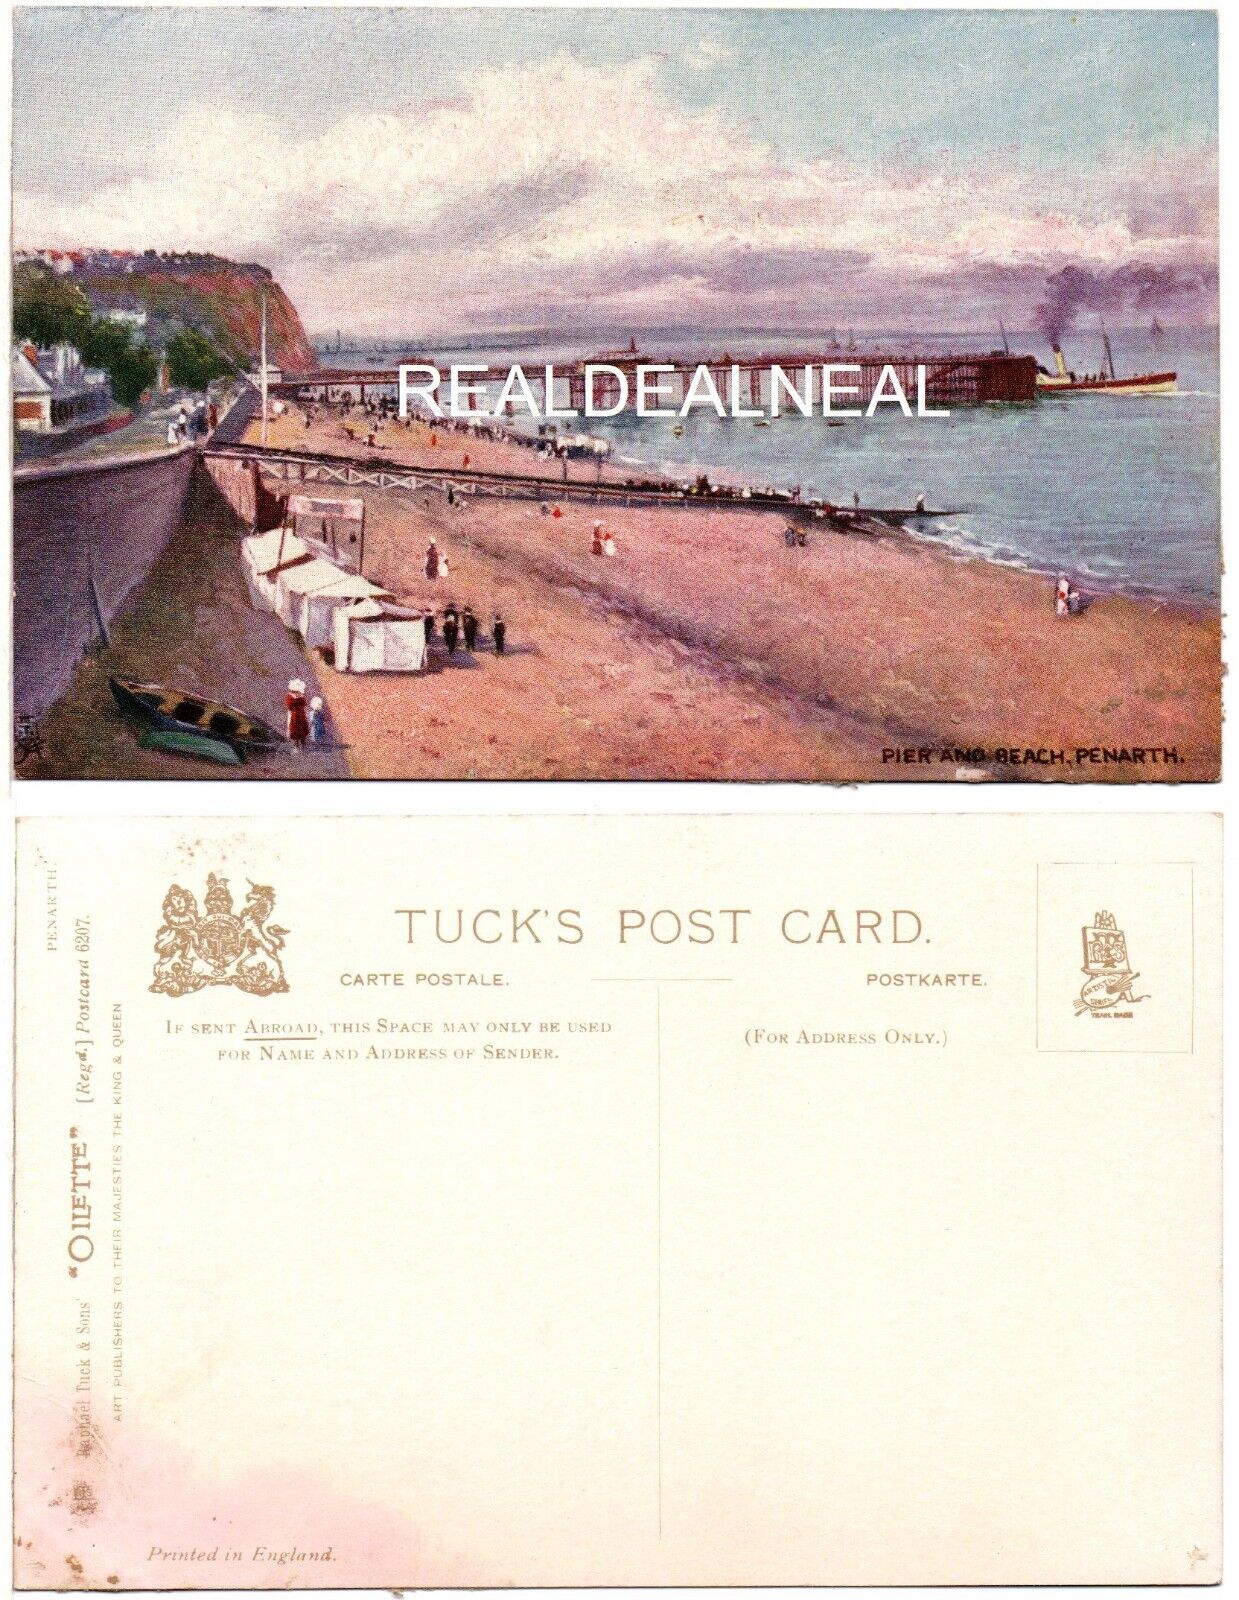 SOUTH WALES - Pier and Beach at Penarth (Circa 1910) Unused TUCK Postcard